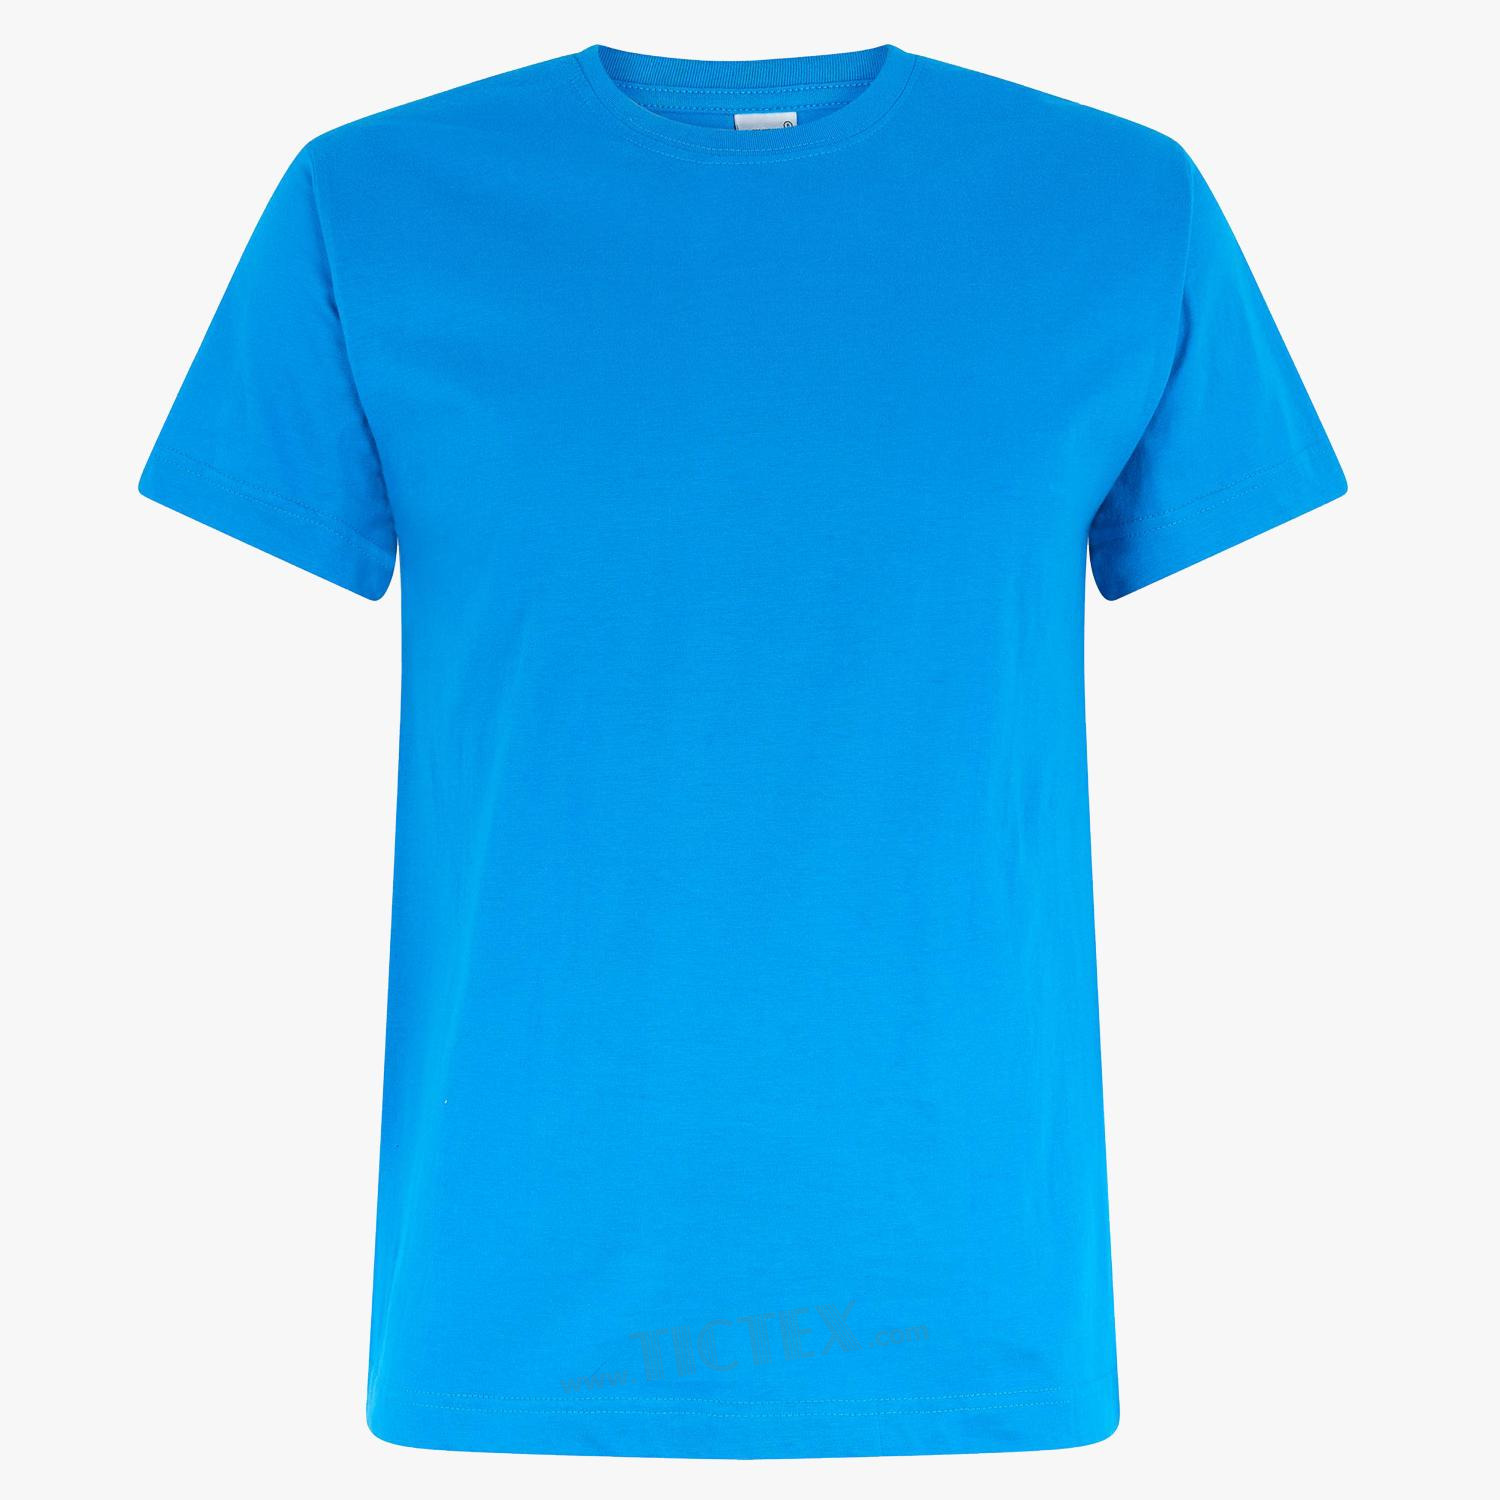 LOGOSTAR - Basic T-Shirt - Übergrößen 3XL 4XL 6XL 8XL 10XL 12XL 15XL | eBay